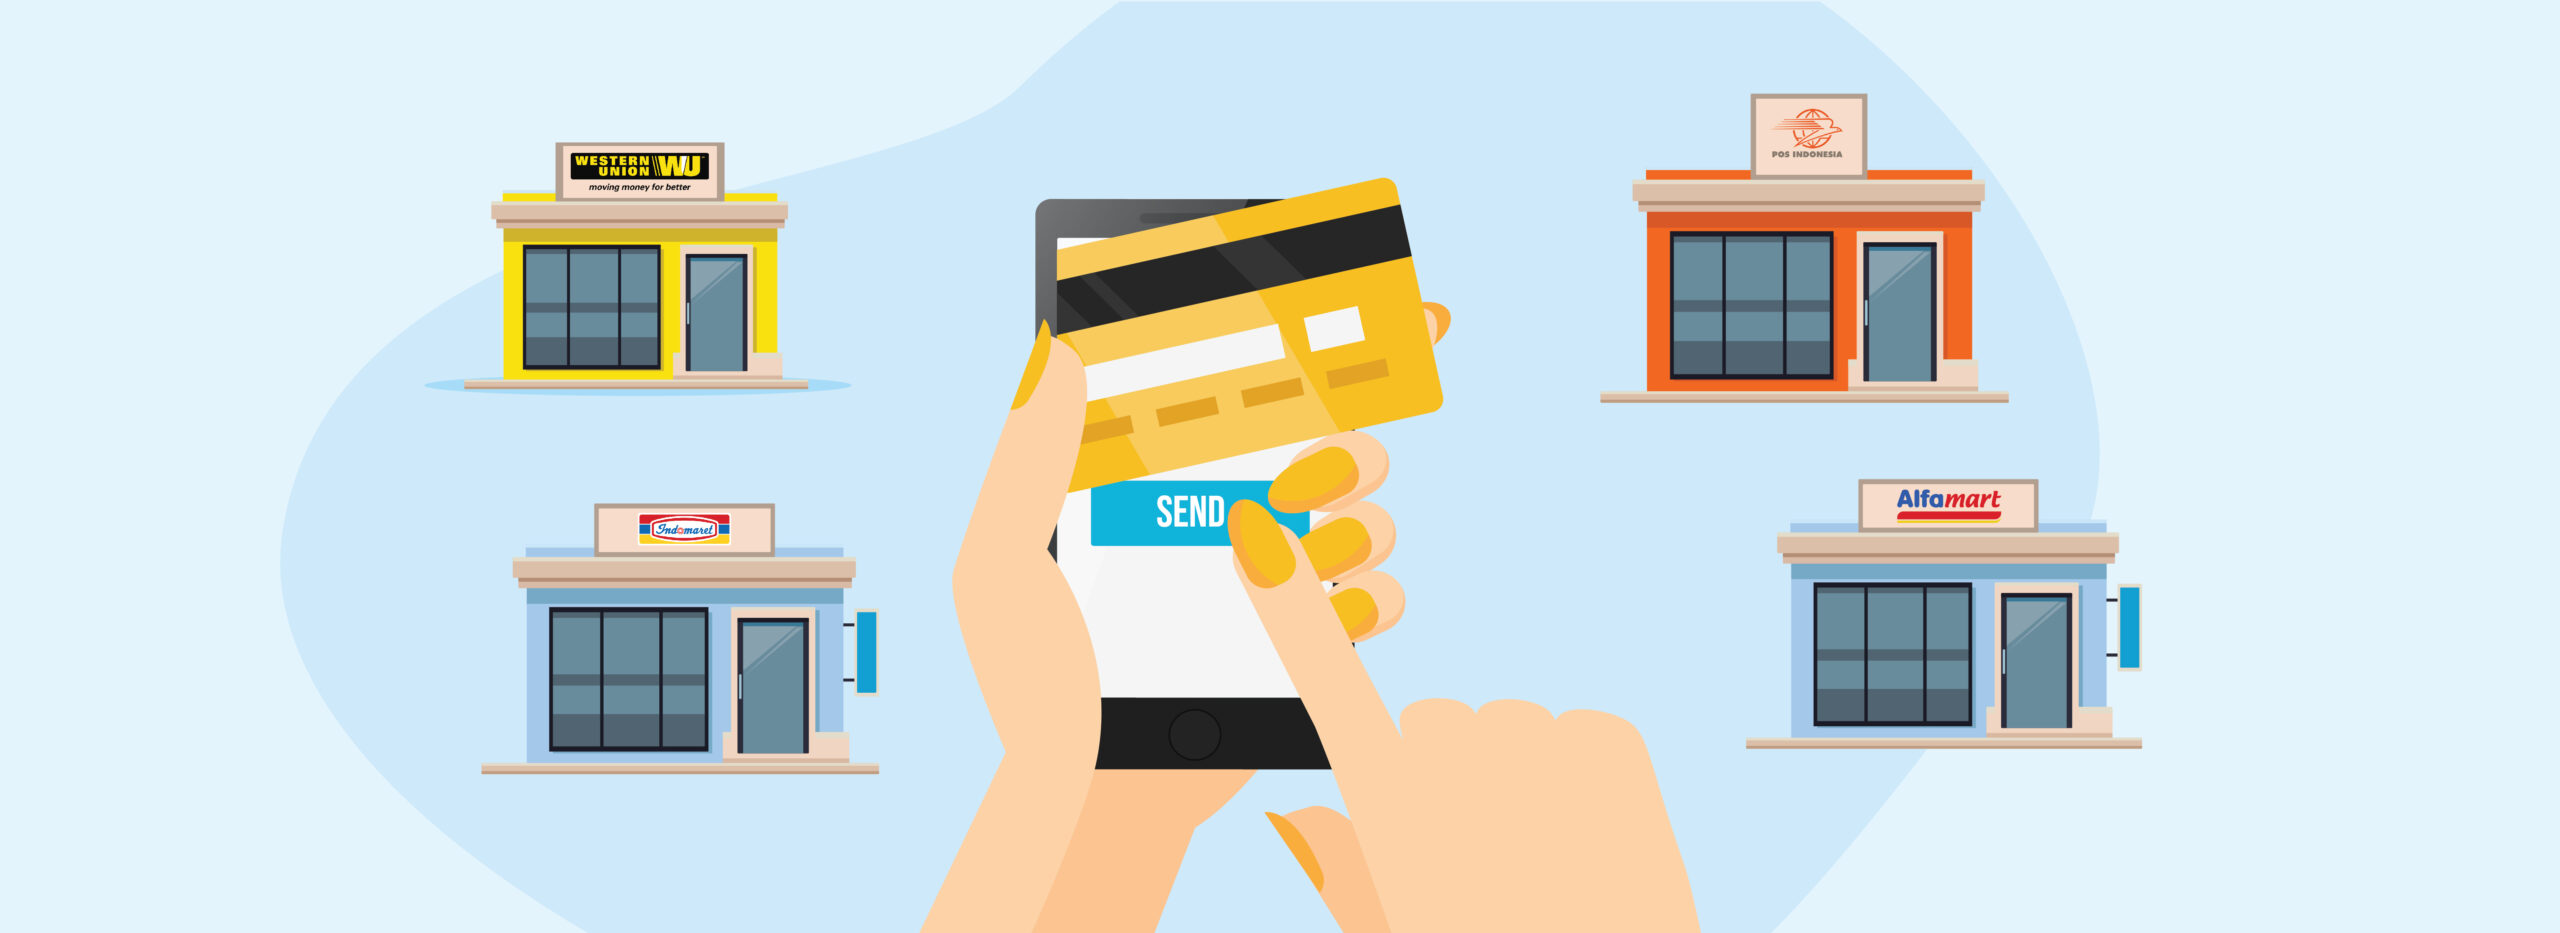 Intip 5 Cara Transfer Uang ke Rekening Orang Tanpa ATM